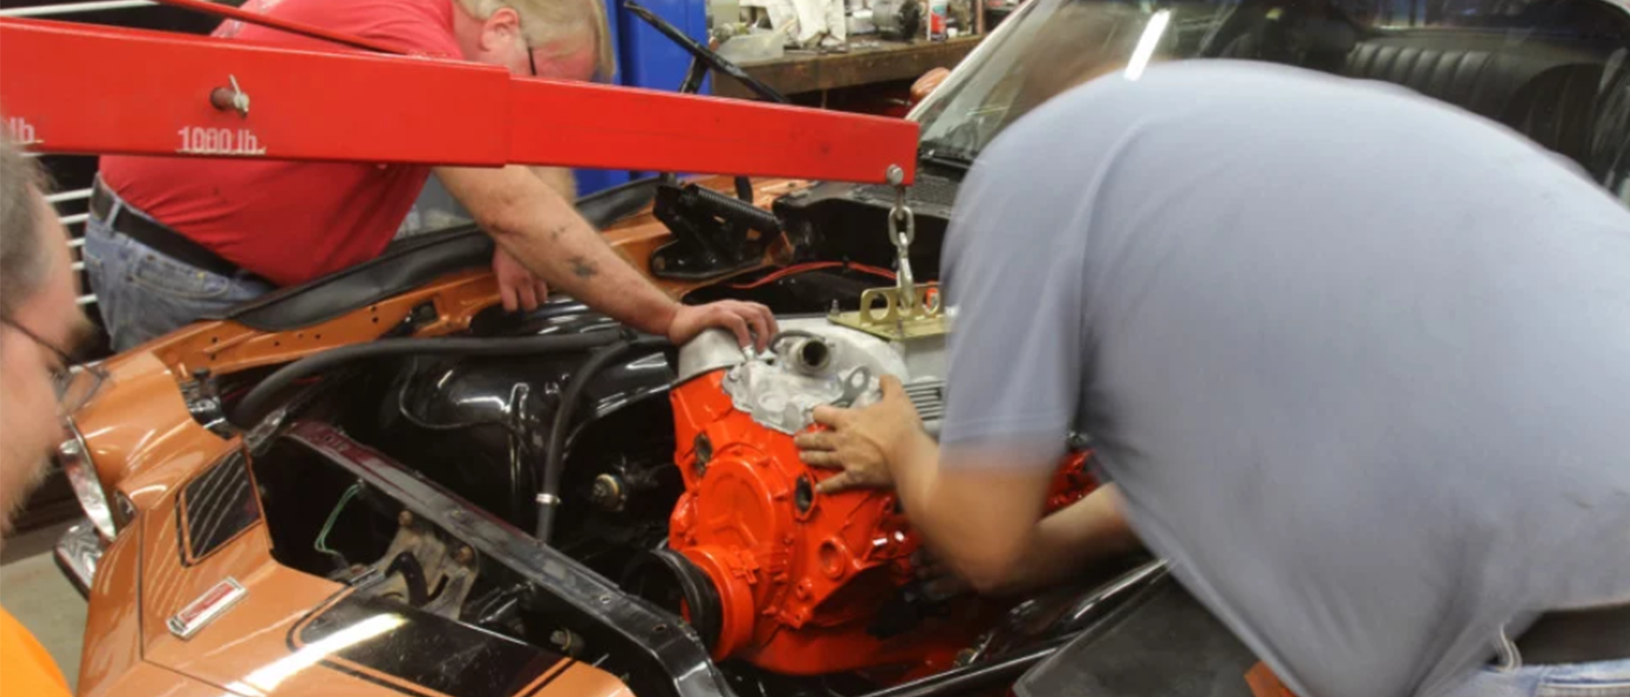 three men working on a car engine